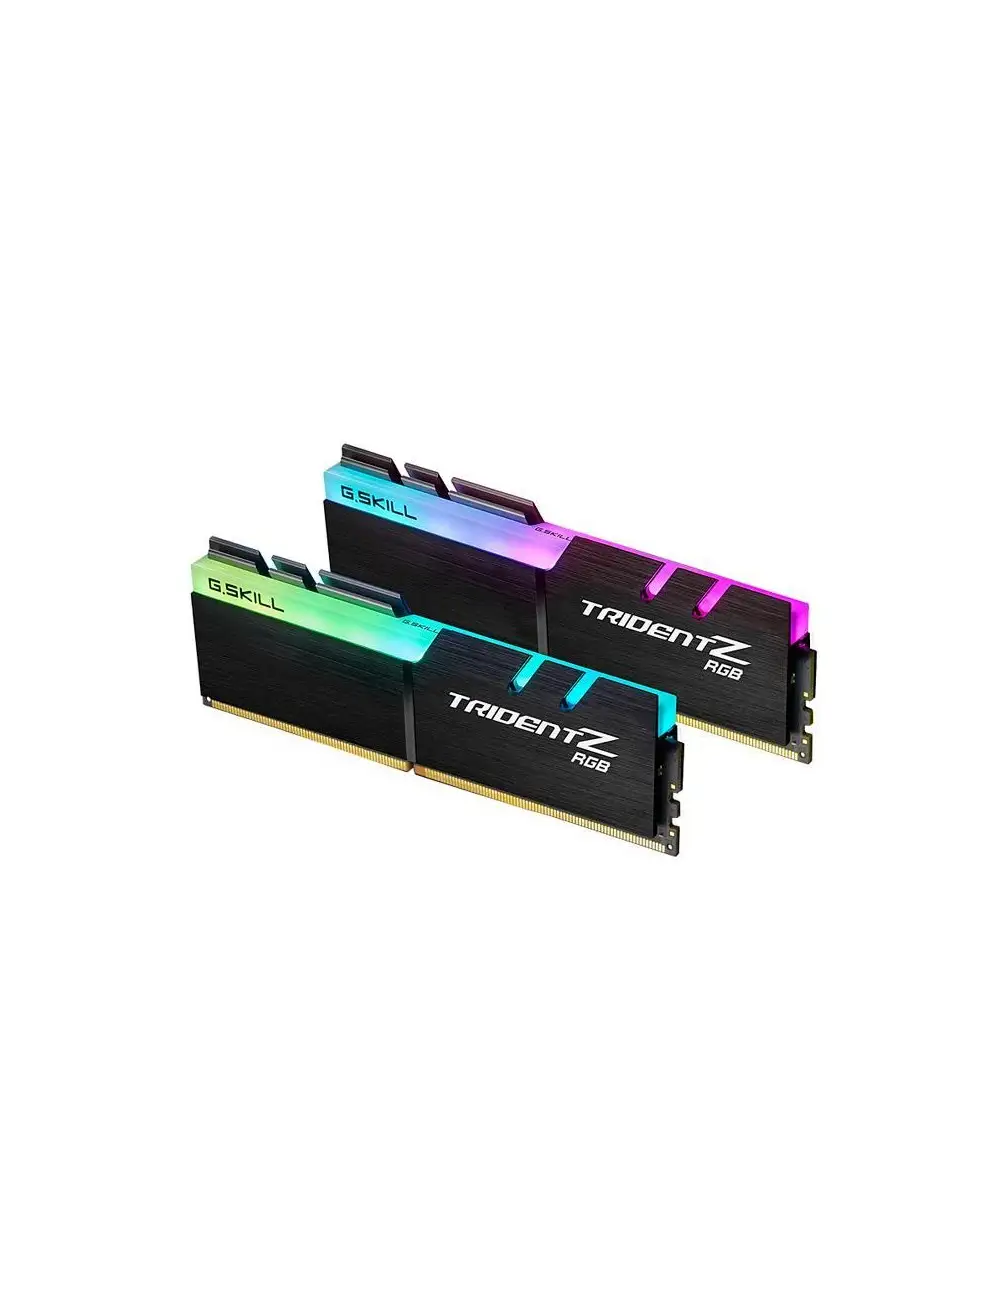 RAM 16GB (8x2) 3600MHZ DDR4 G-SKILL TRIDENT Z RGB CL18 F4-3600C18D-16GTZRX